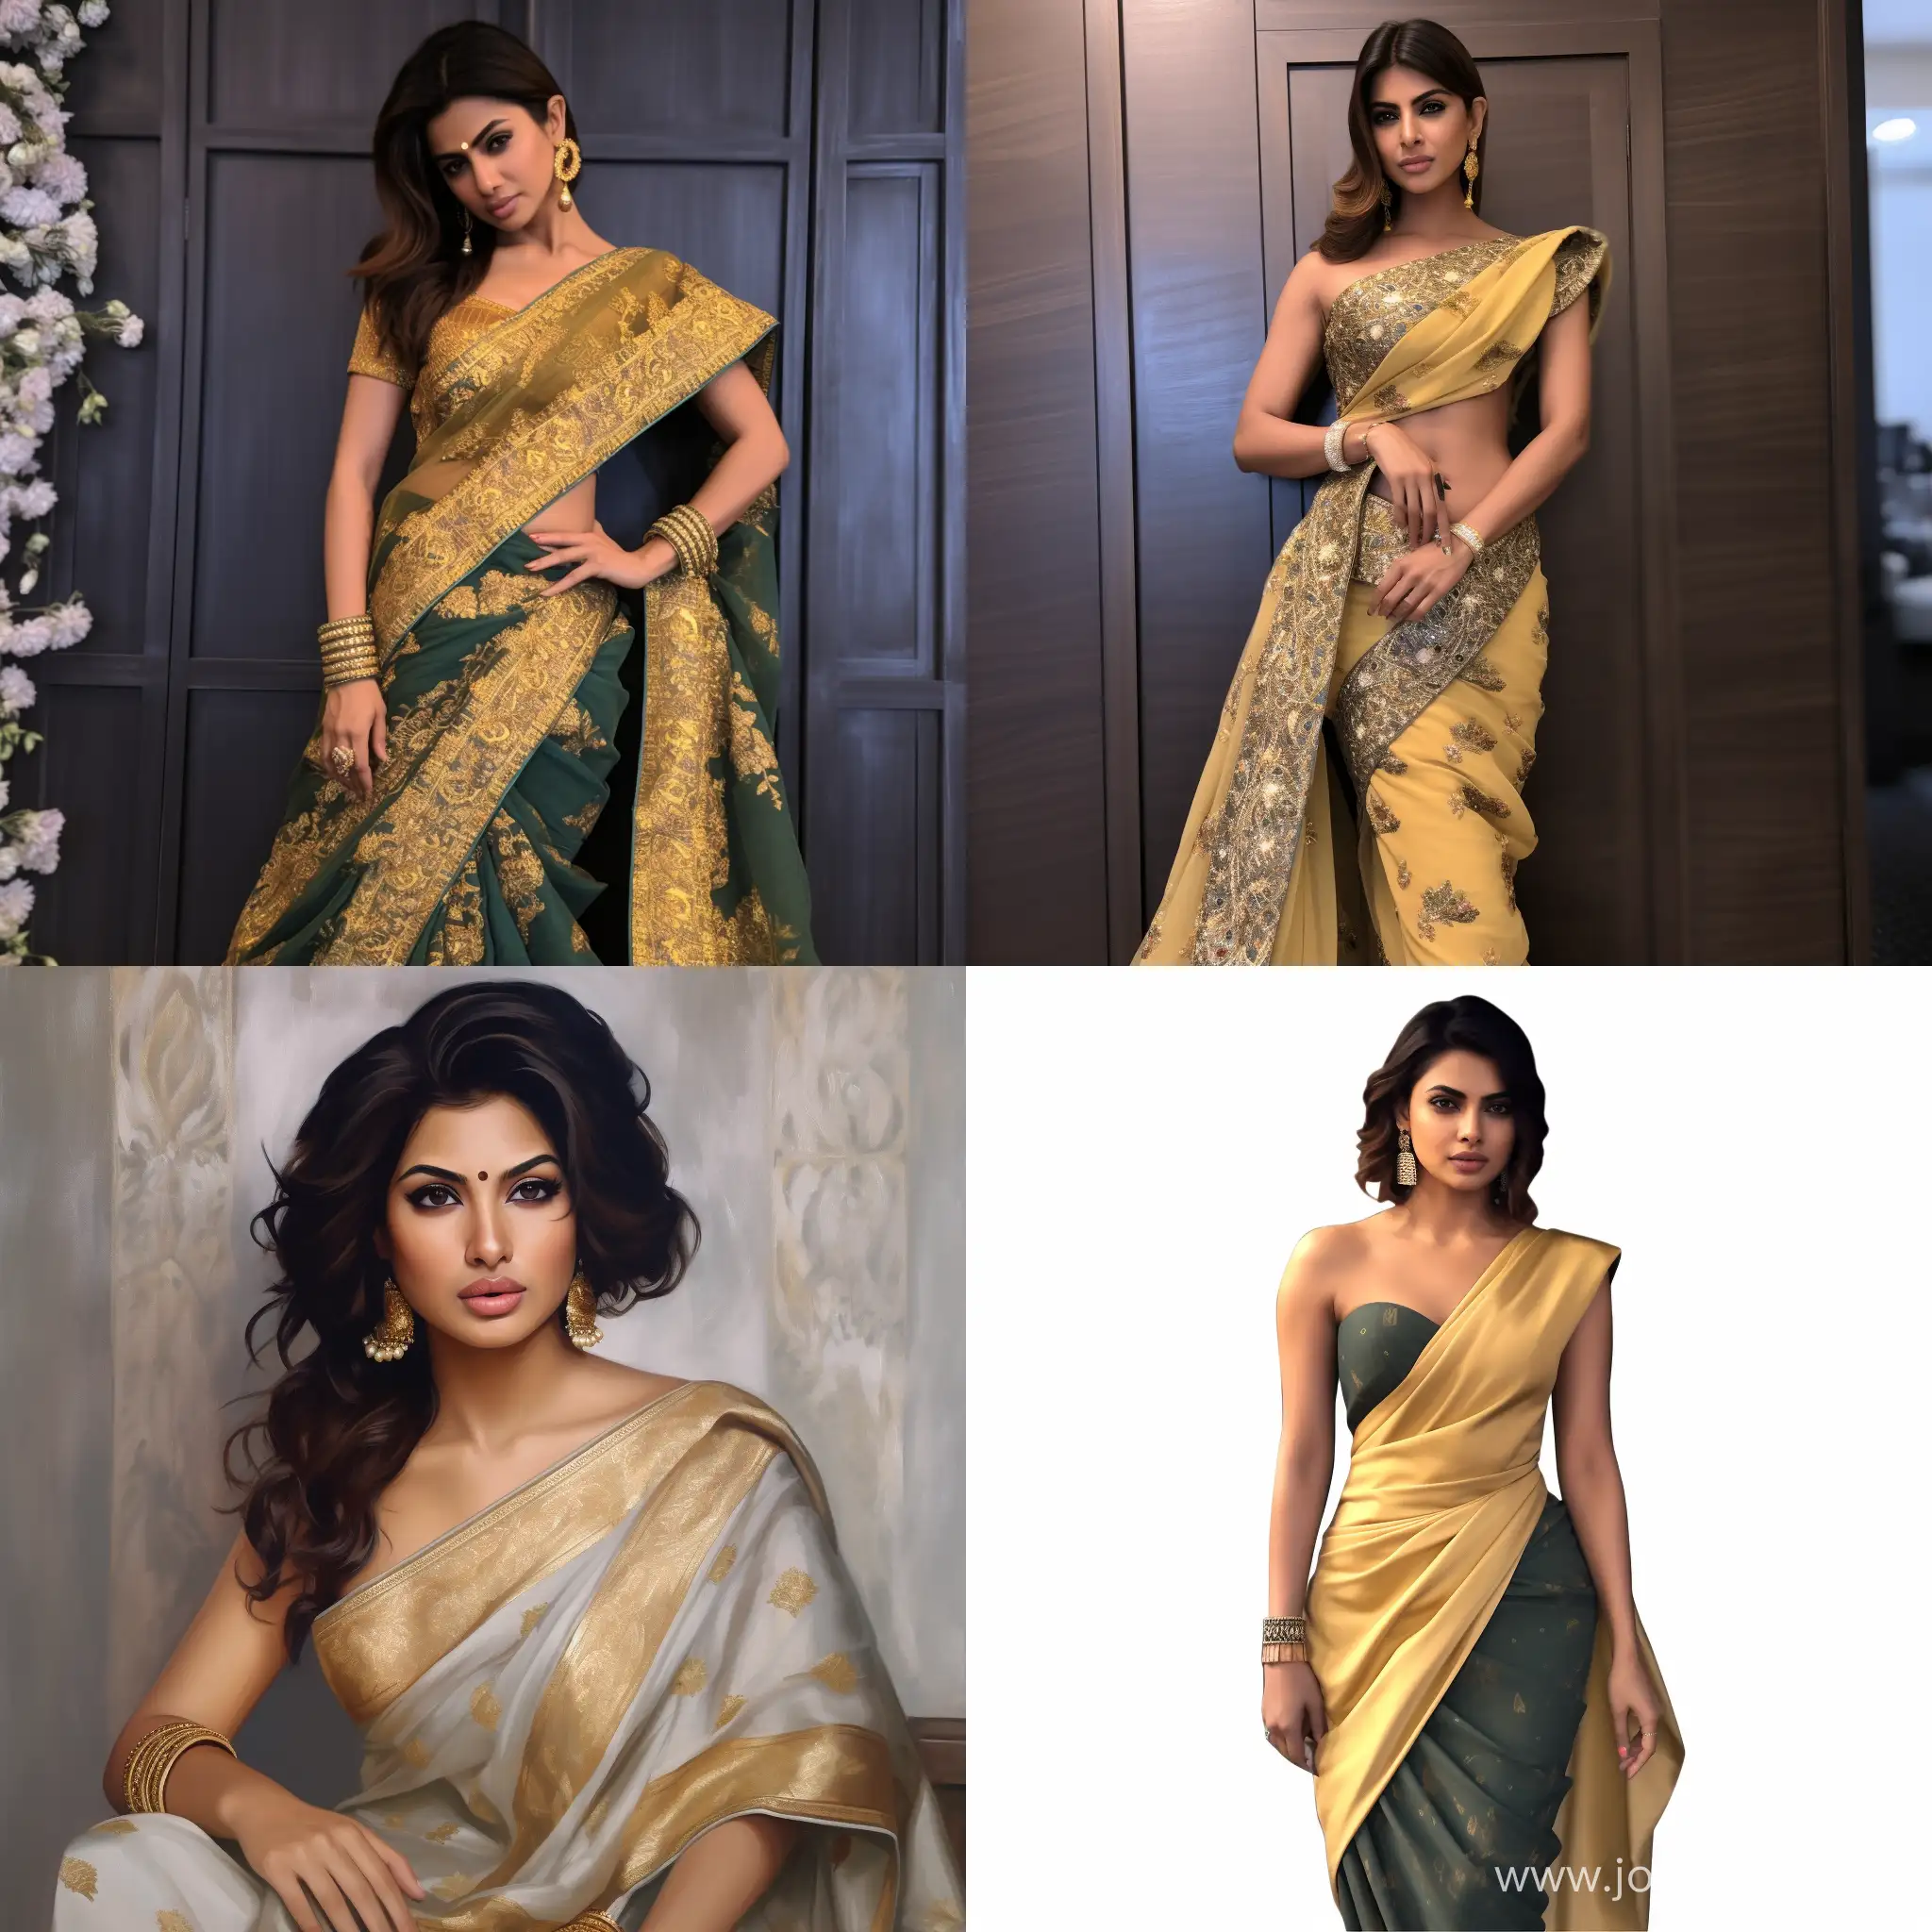 Priyanka-Chopra-Stunning-in-Traditional-Saree-Elegance-and-Grace-Captured-in-AR-11-Image-57080